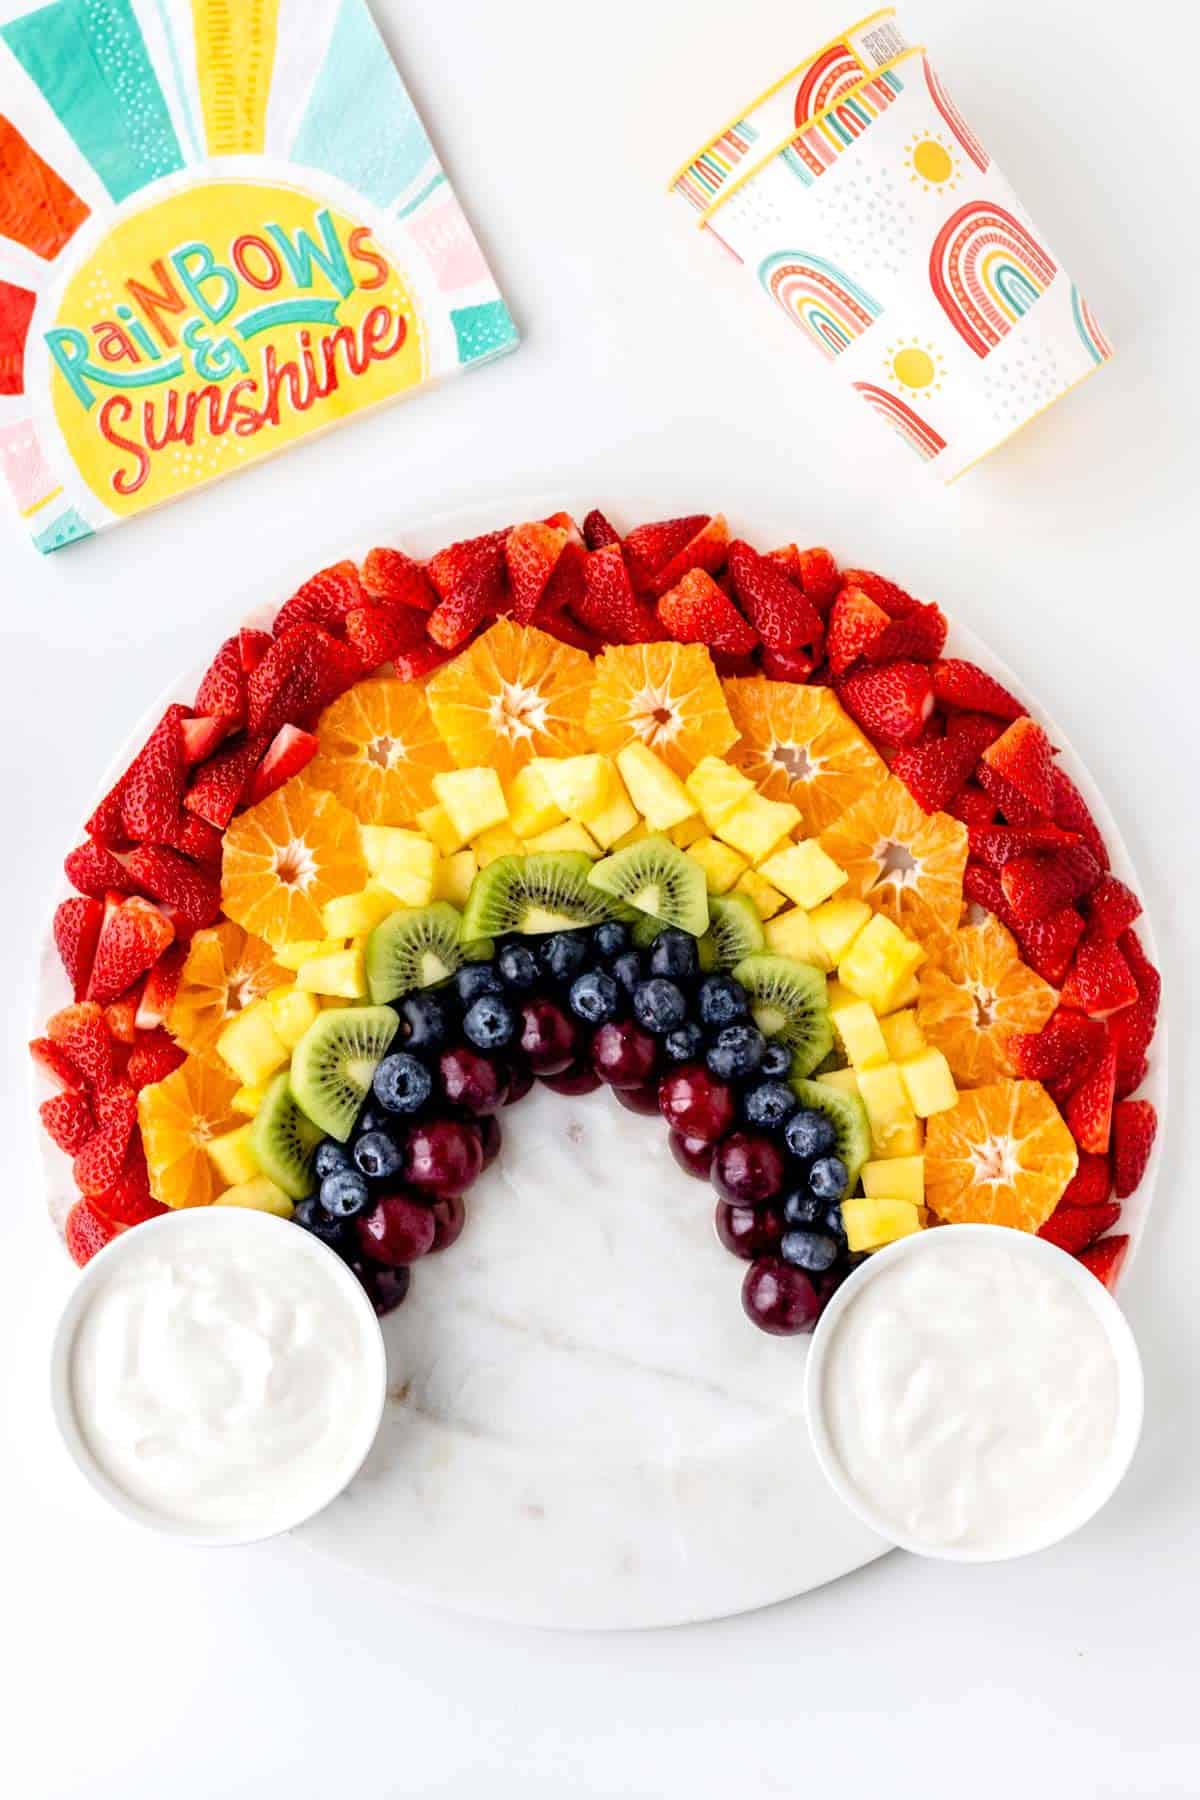 Rainbow fruit board on a decorative platter with yogurt dip on each end.